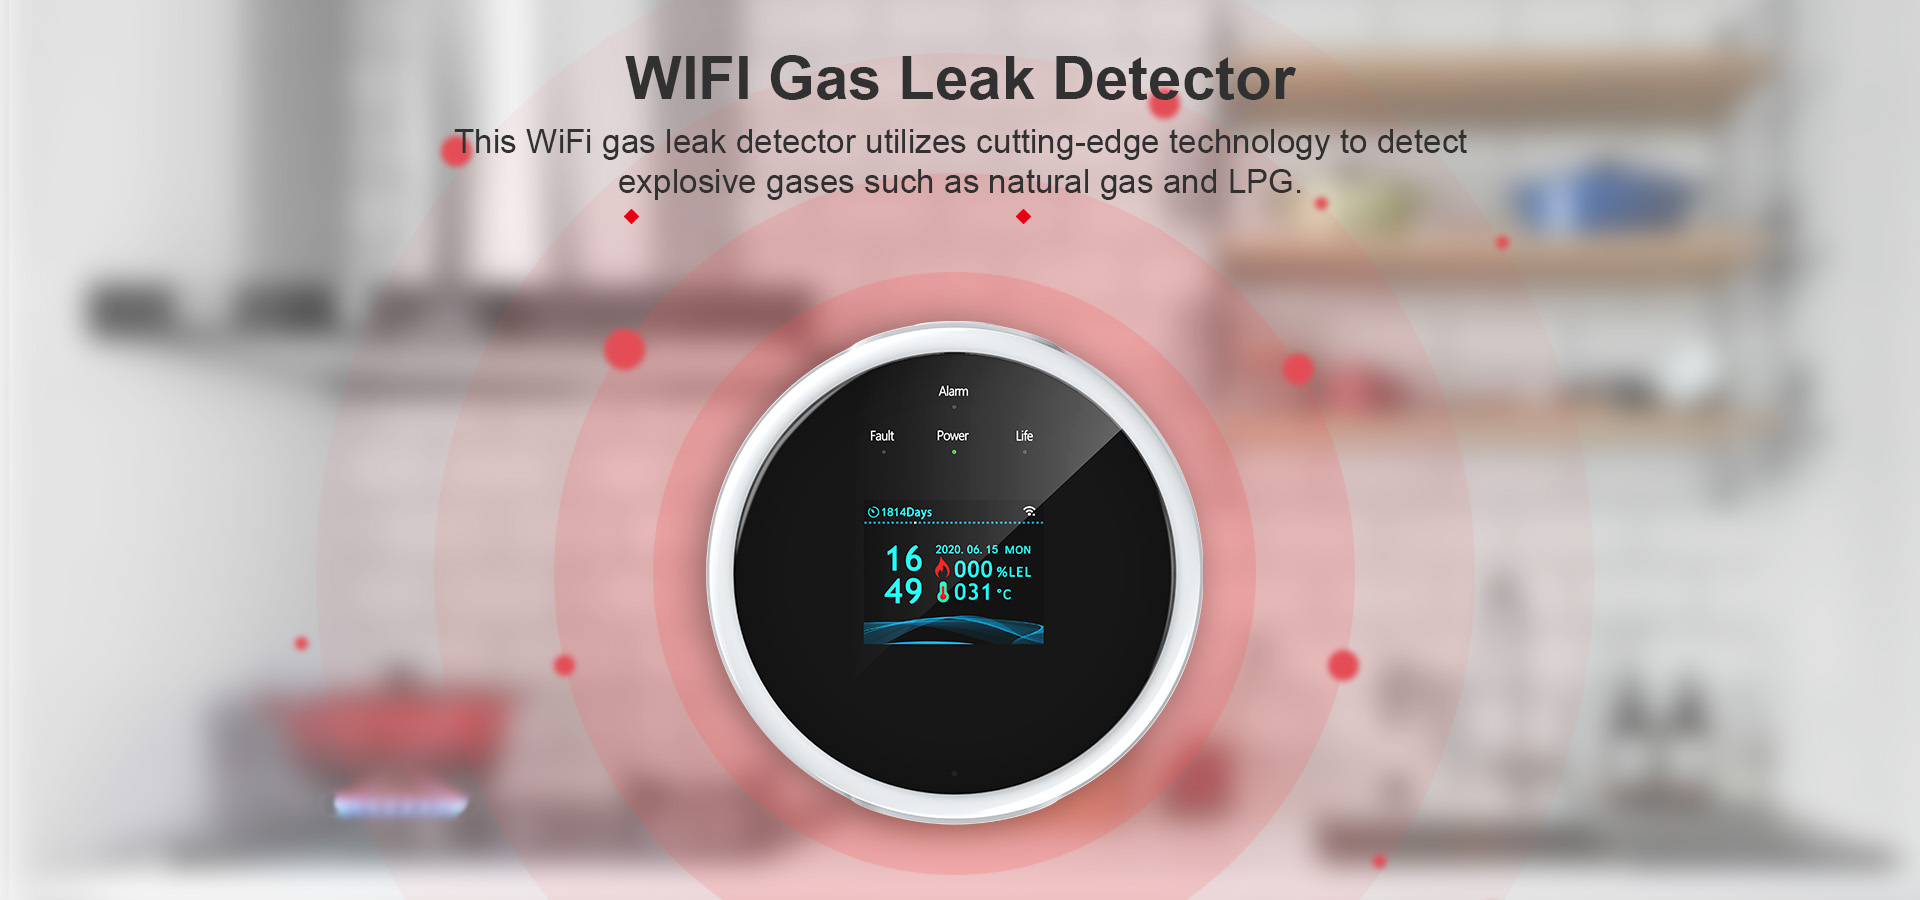 WIFI Gas Leak Detector